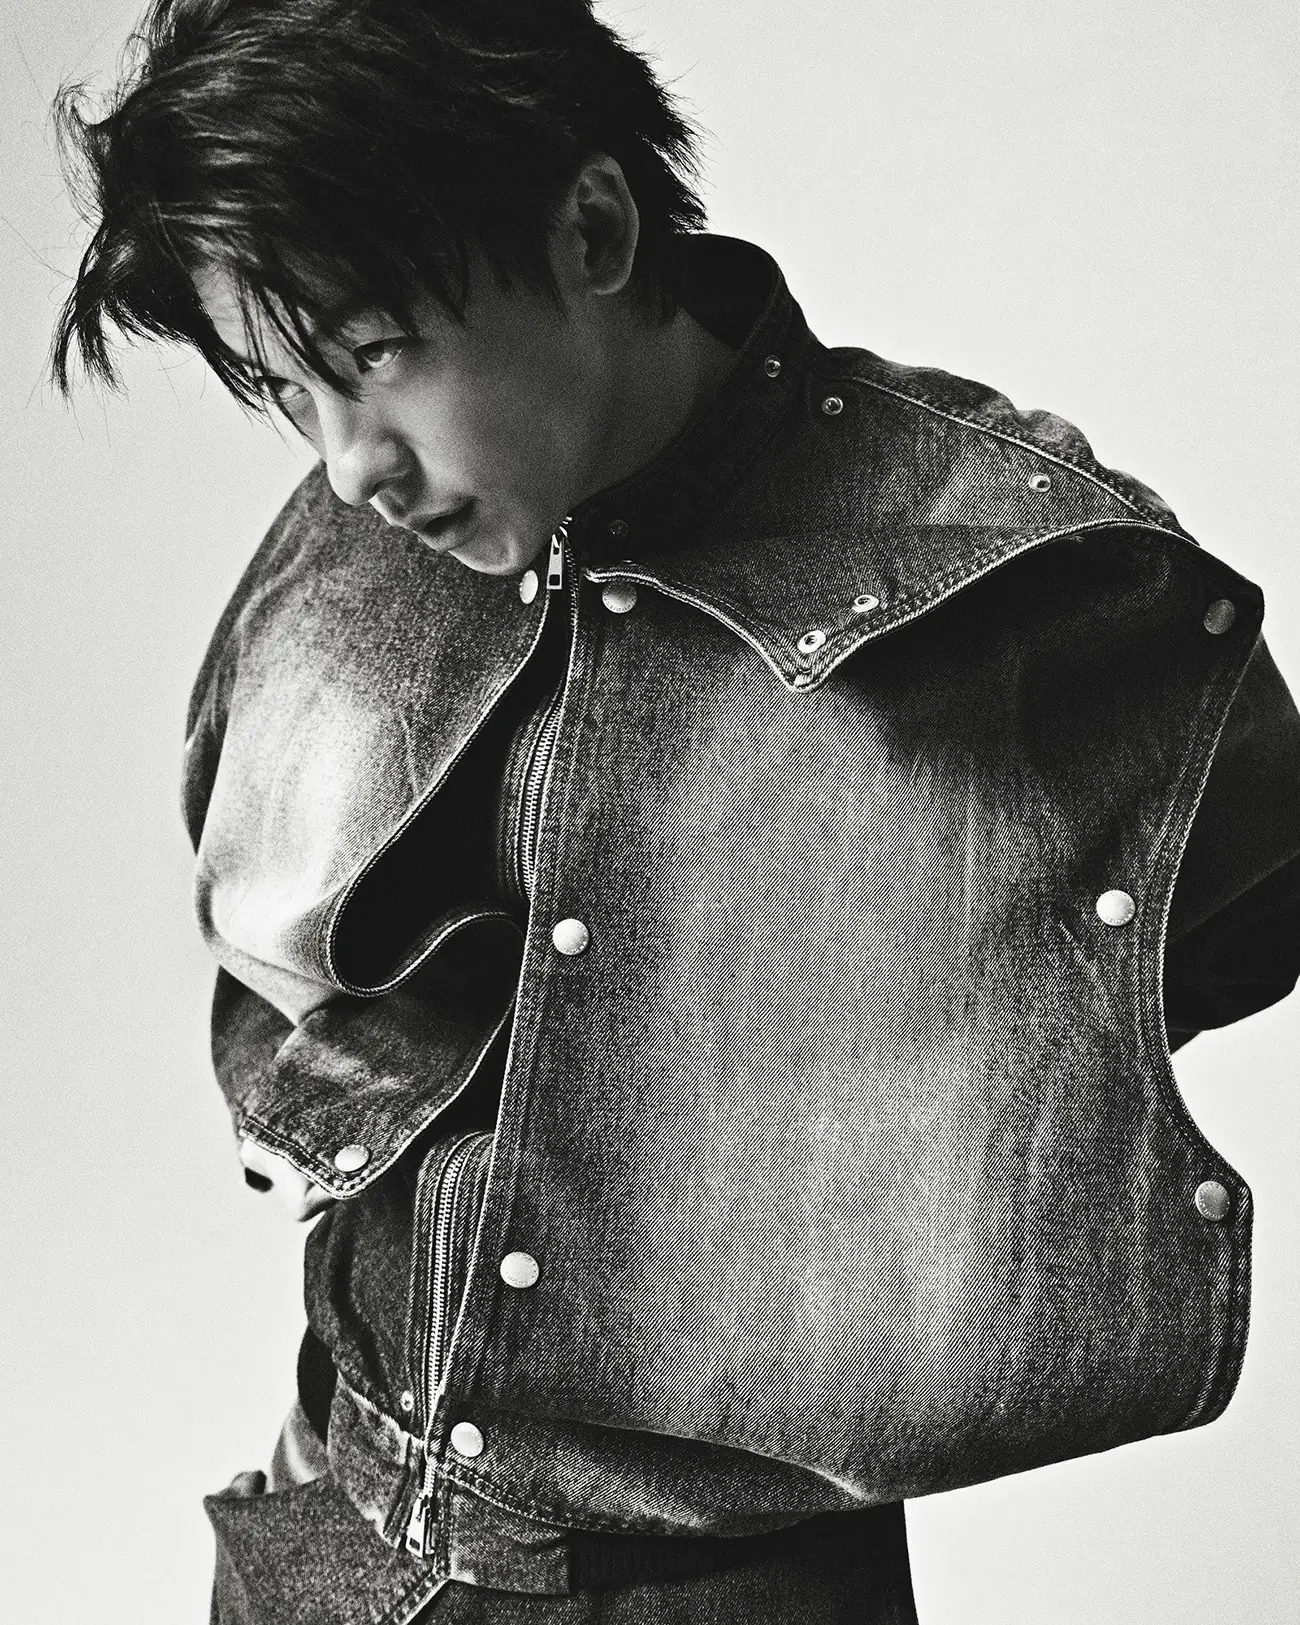 Greg Hsu covers Vogue Taiwan December 2023 by Zhong Lin